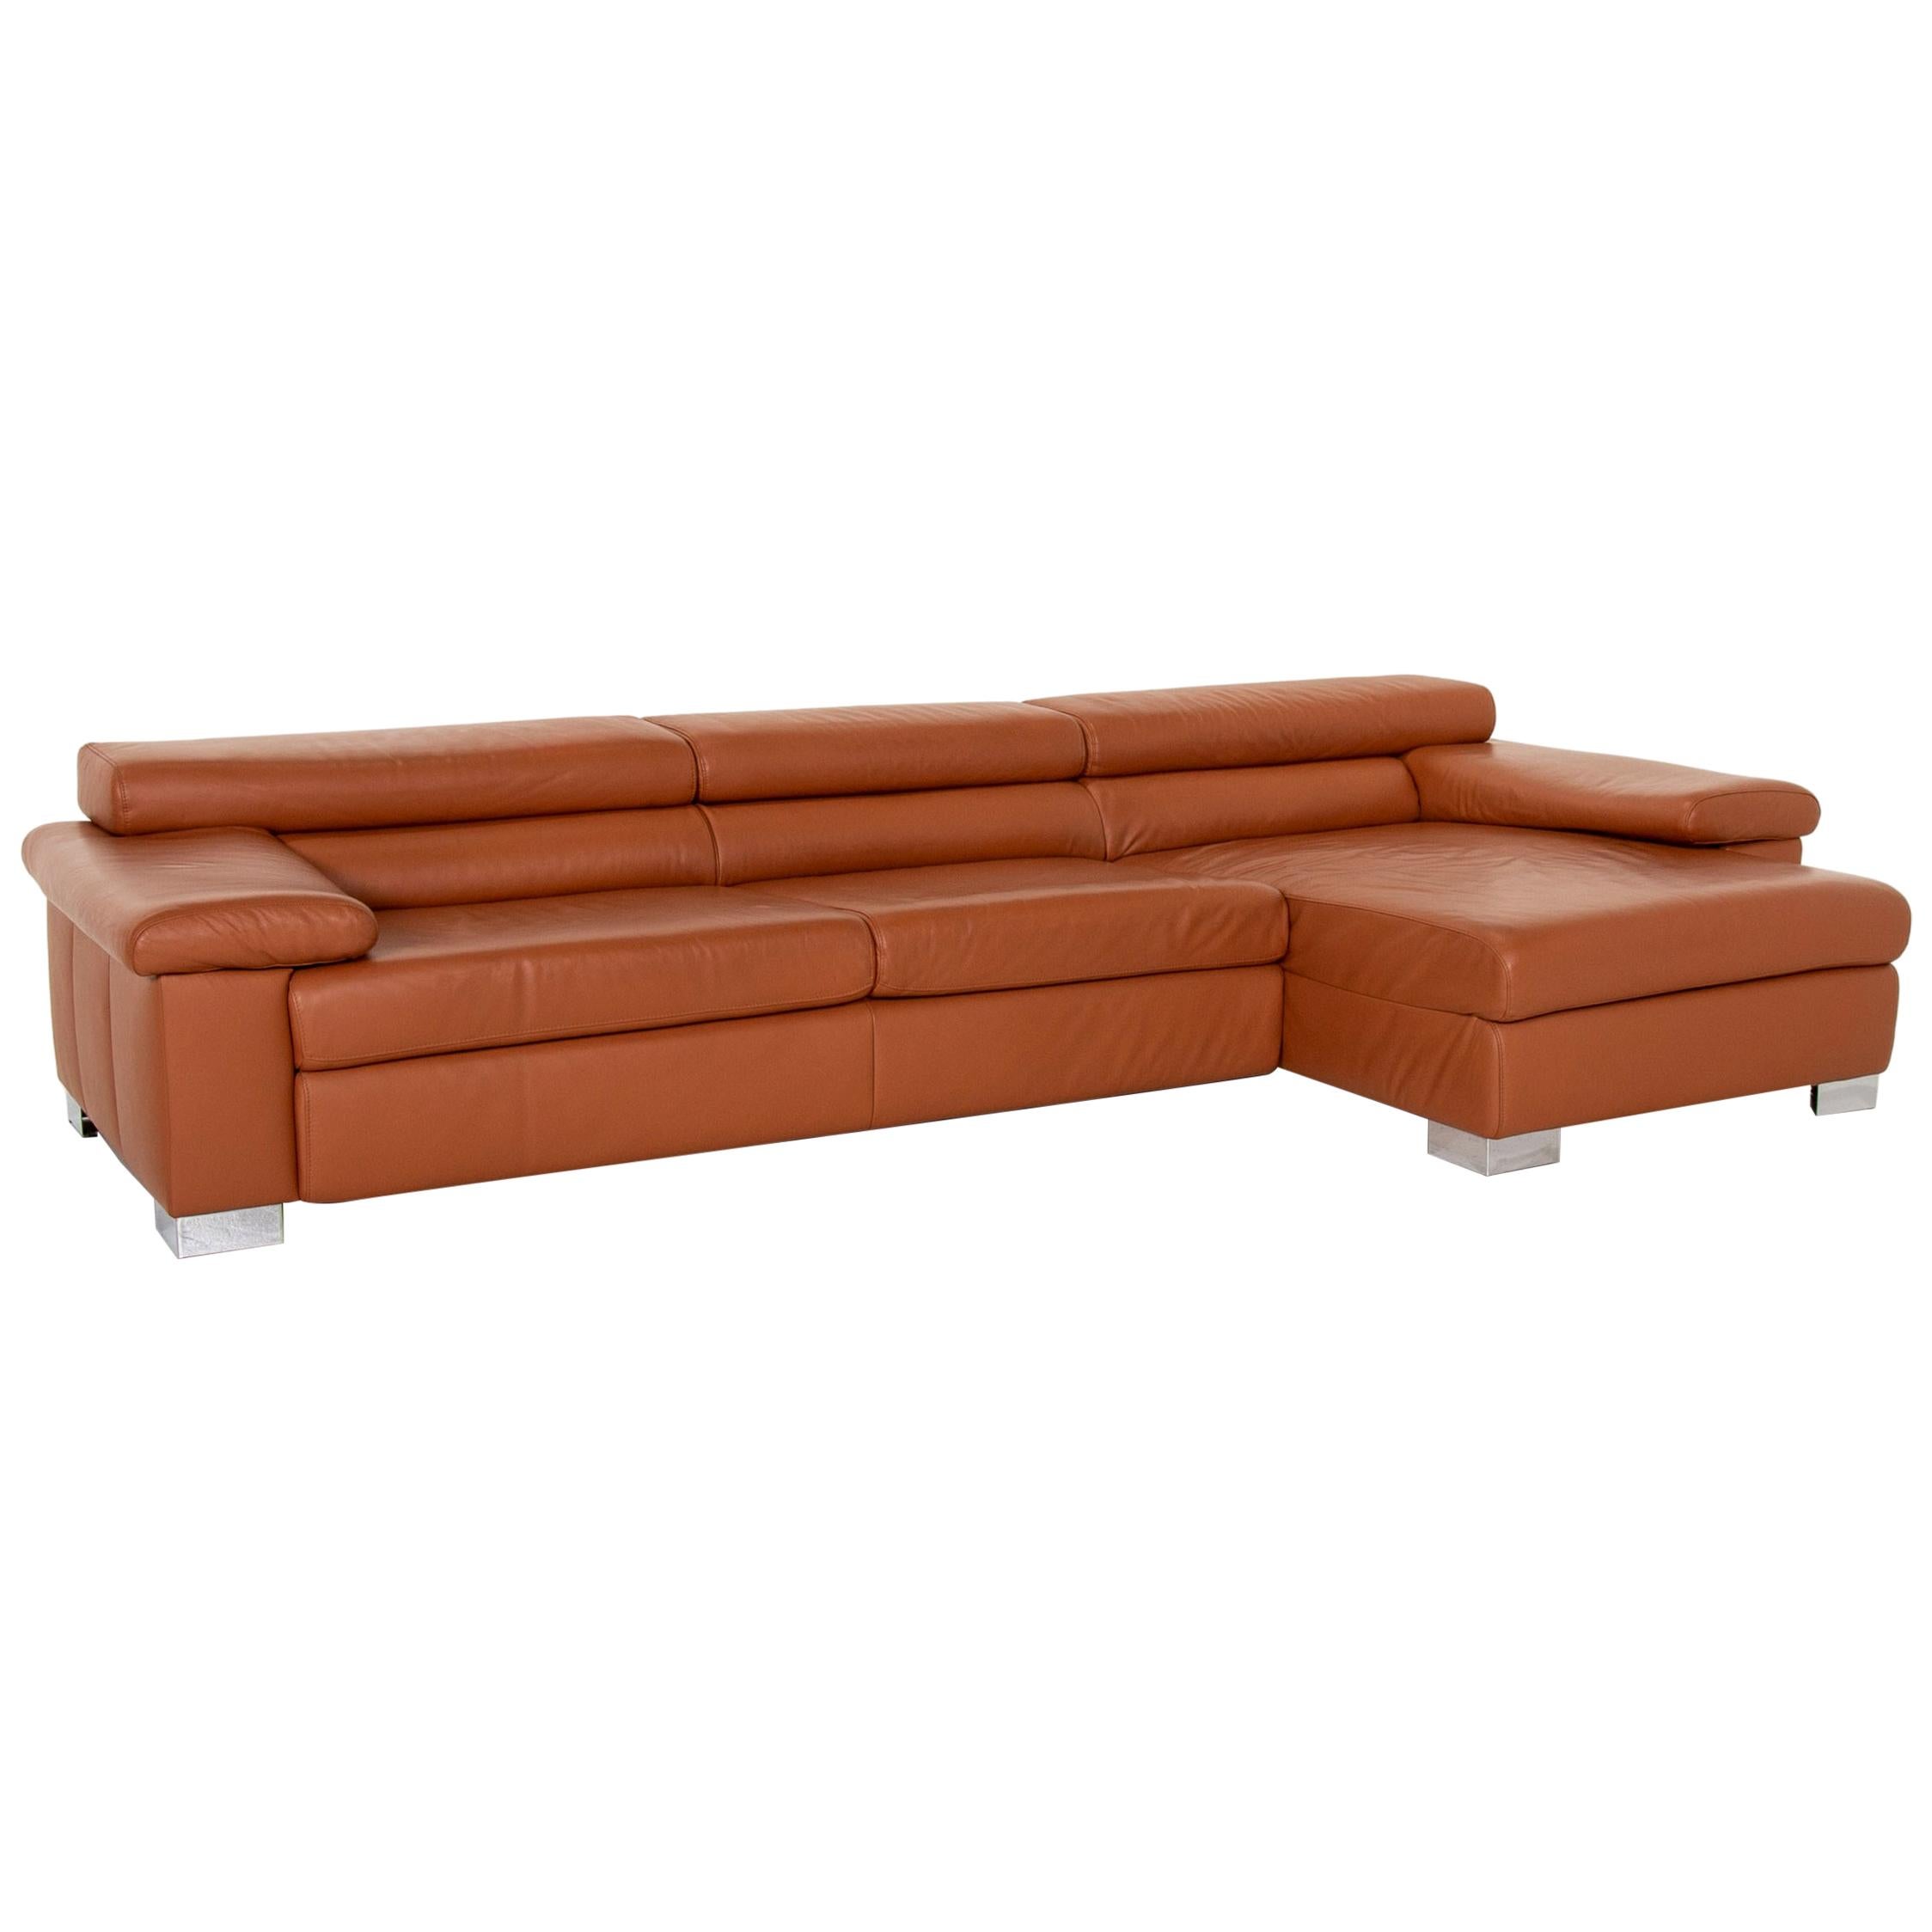 Ewald Schillig Leather Corner Sofa Brown Cognac Sofa Function Couch